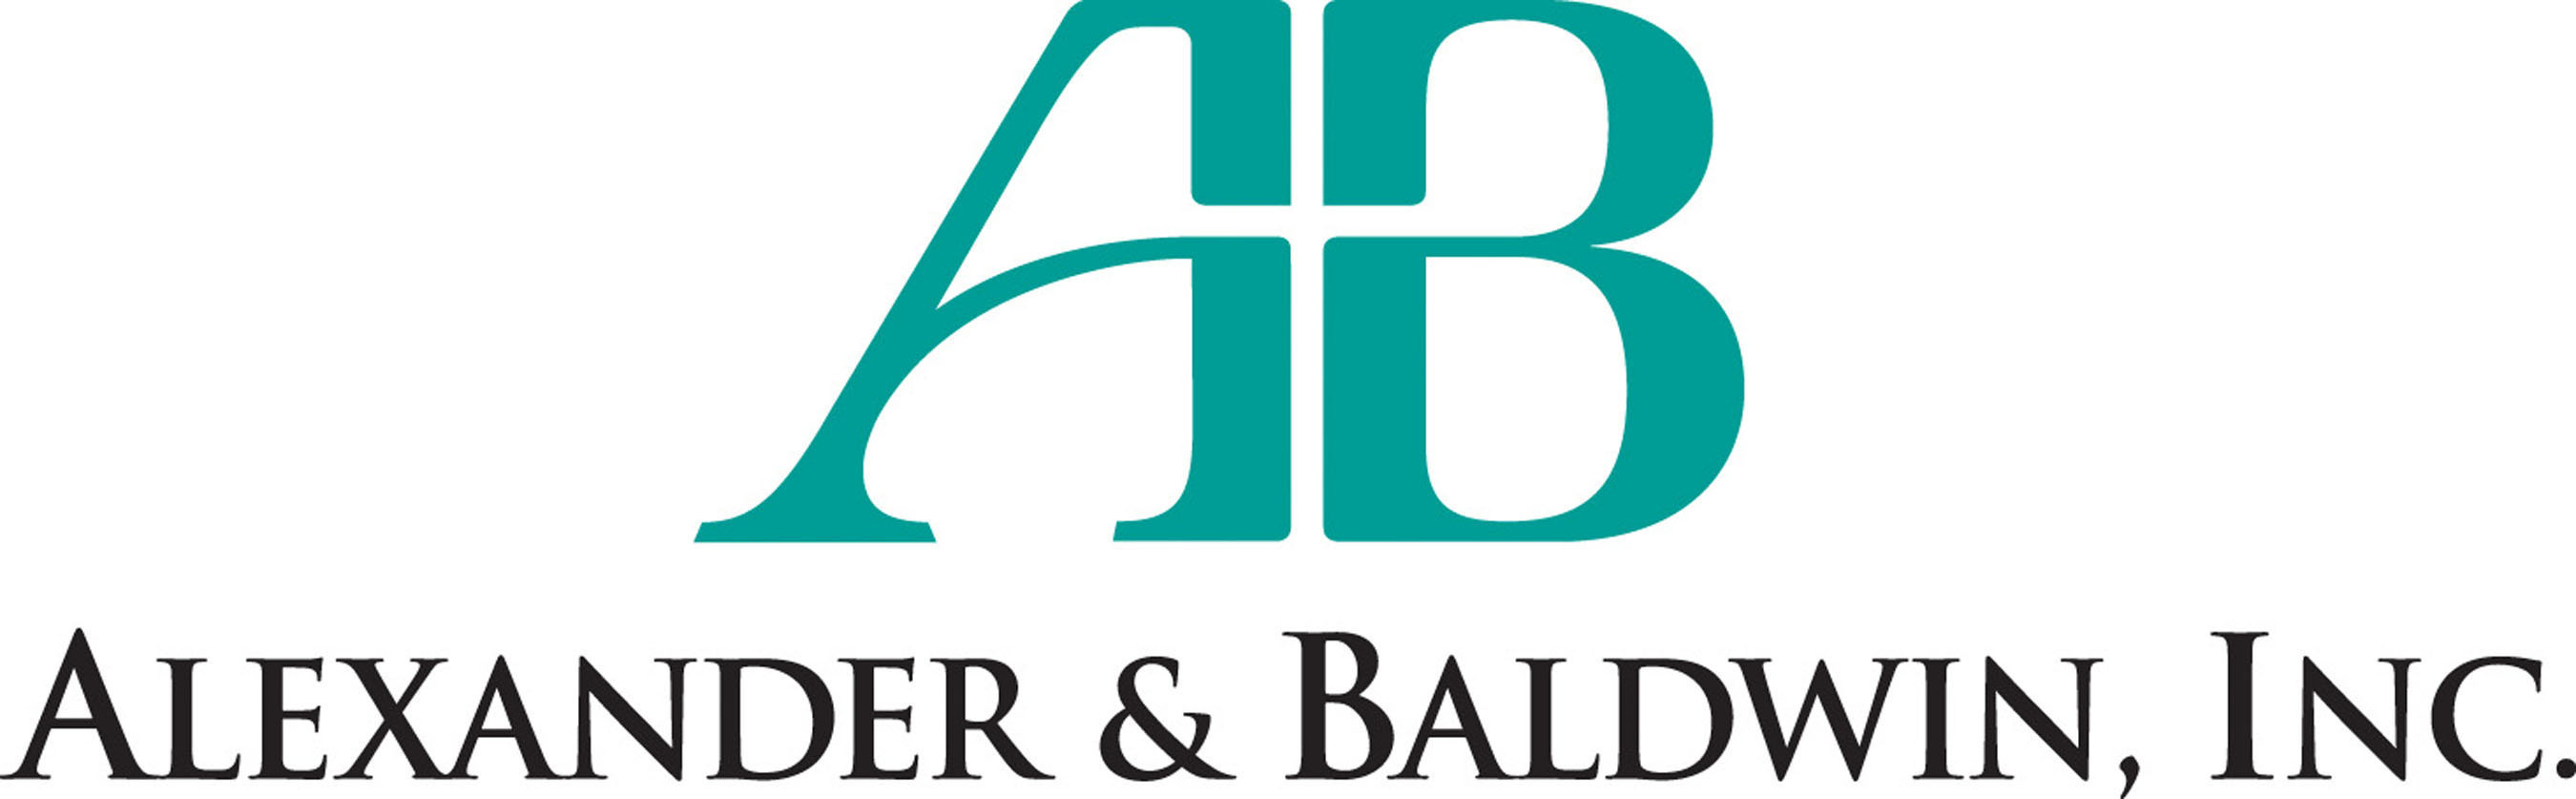 Alexander & Baldwin, Inc. Logo.